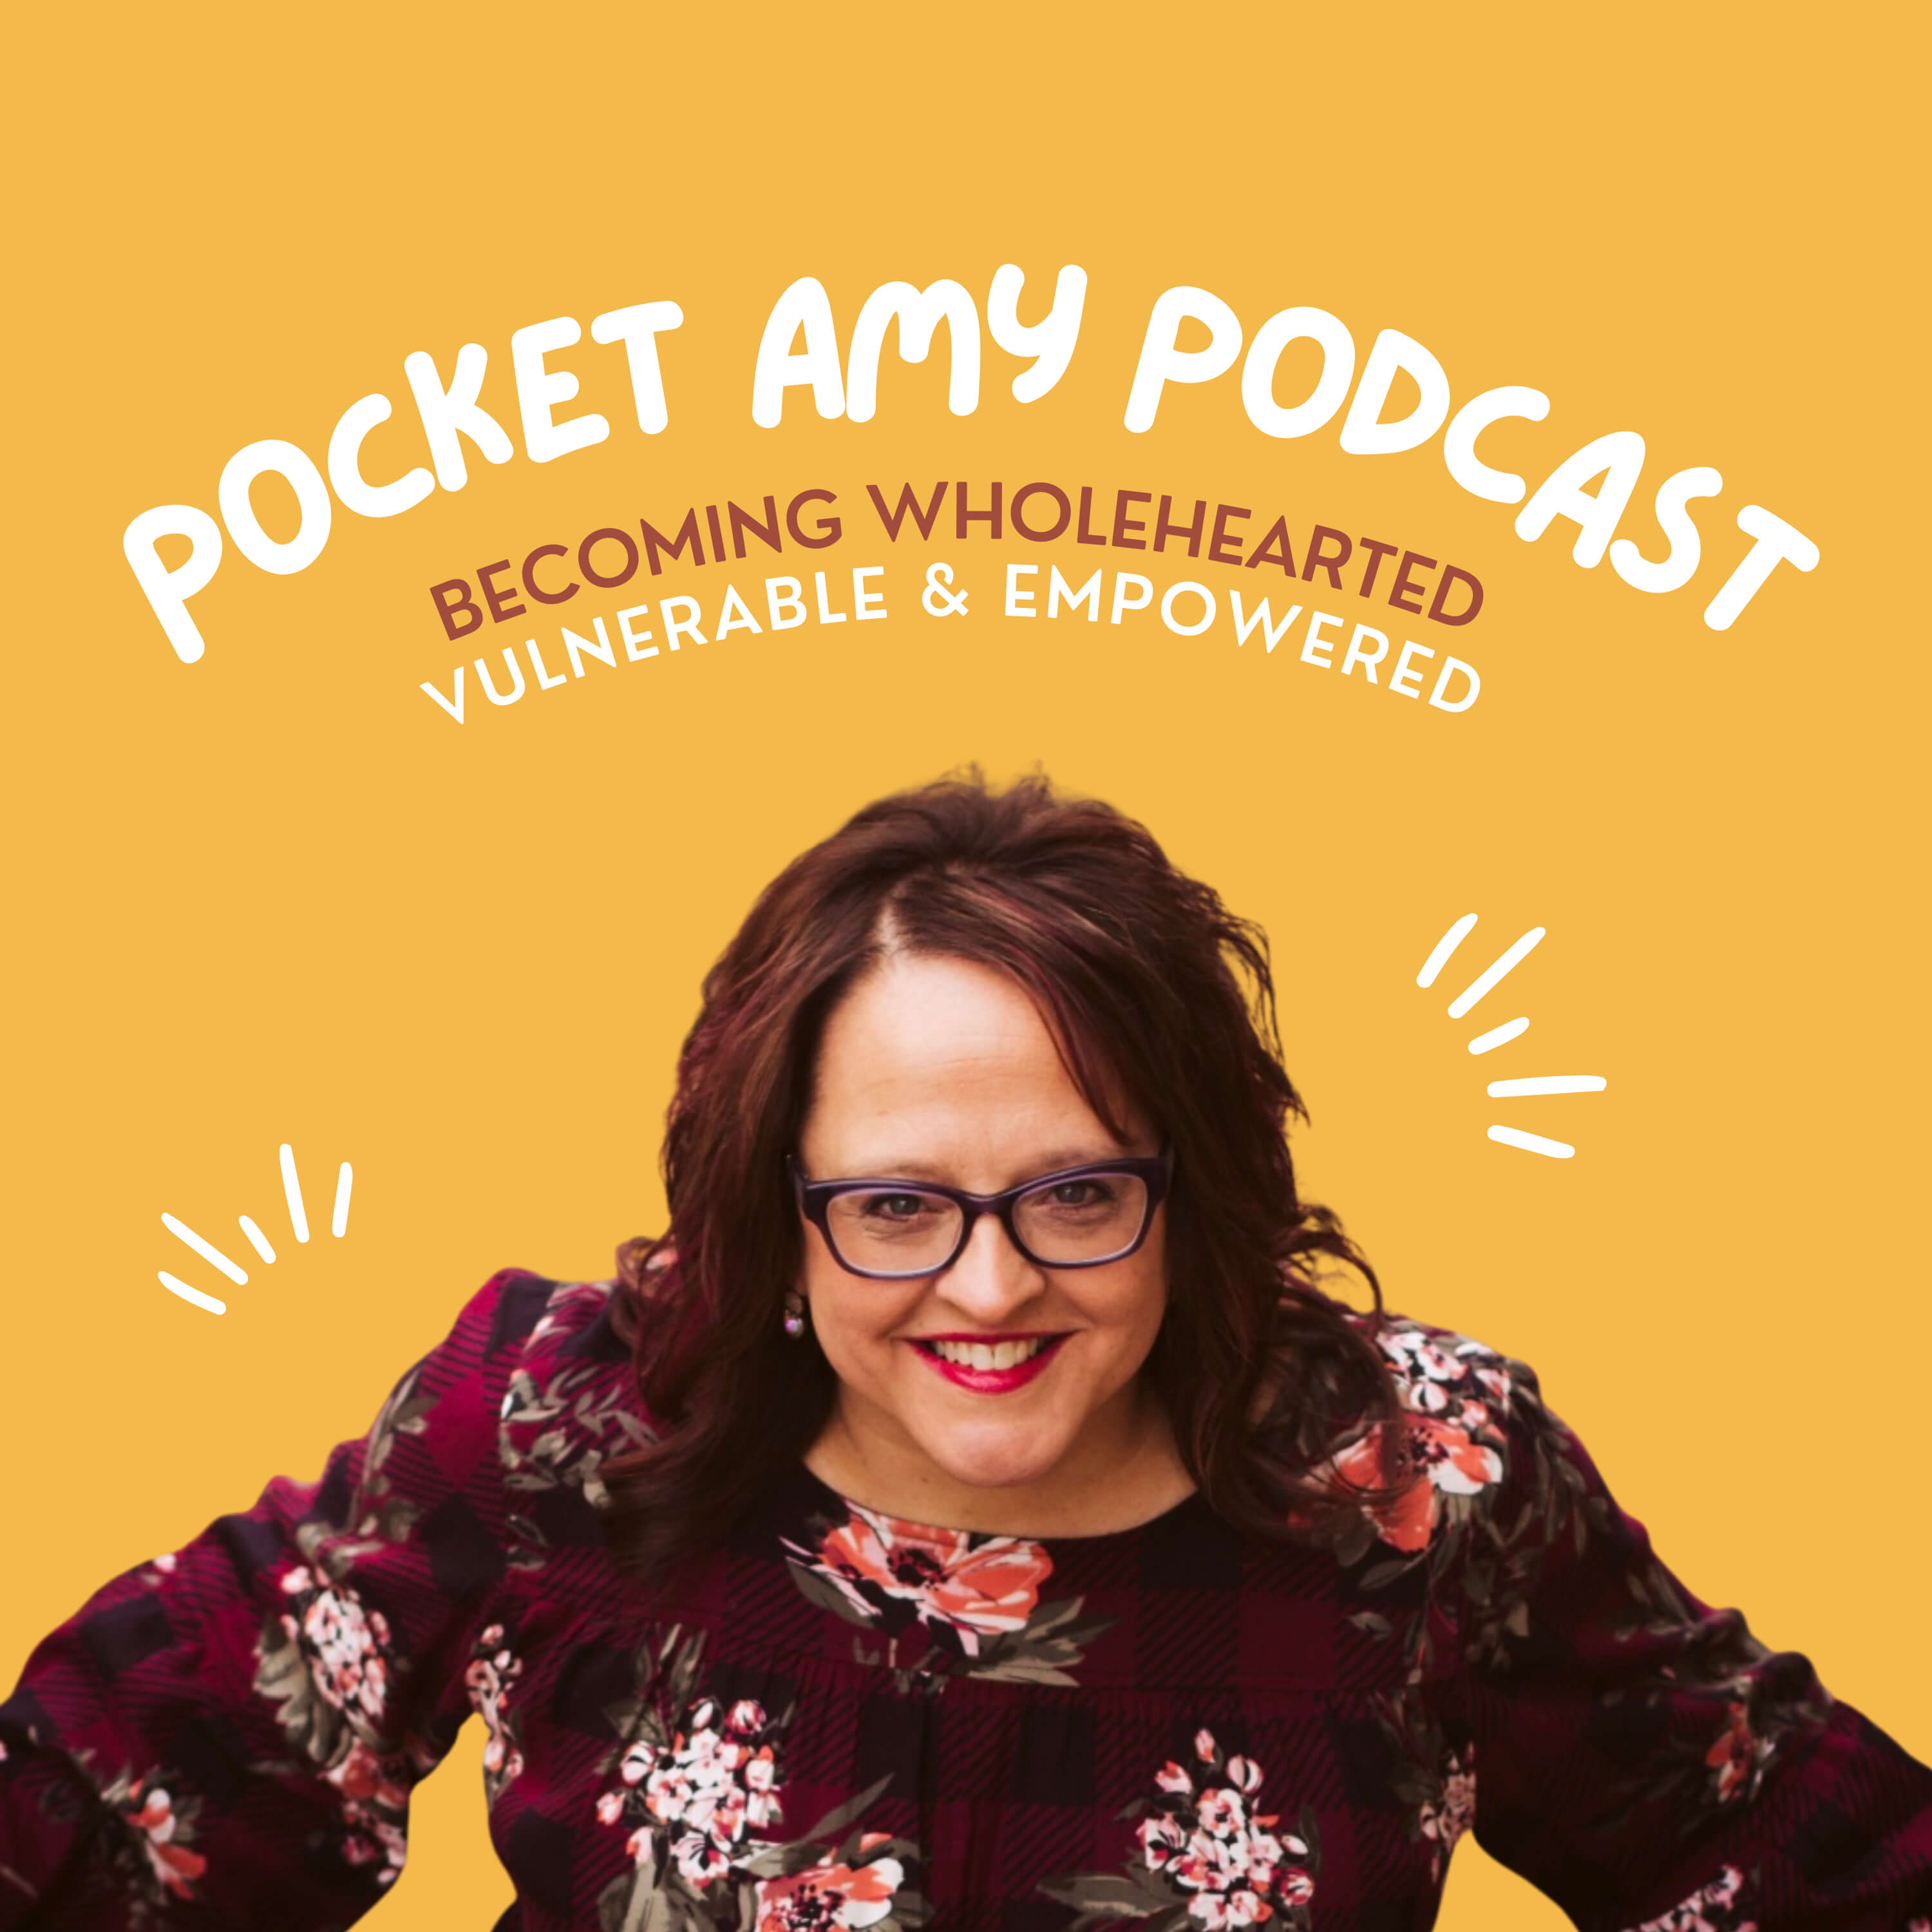 The Pocket Amy Podcast